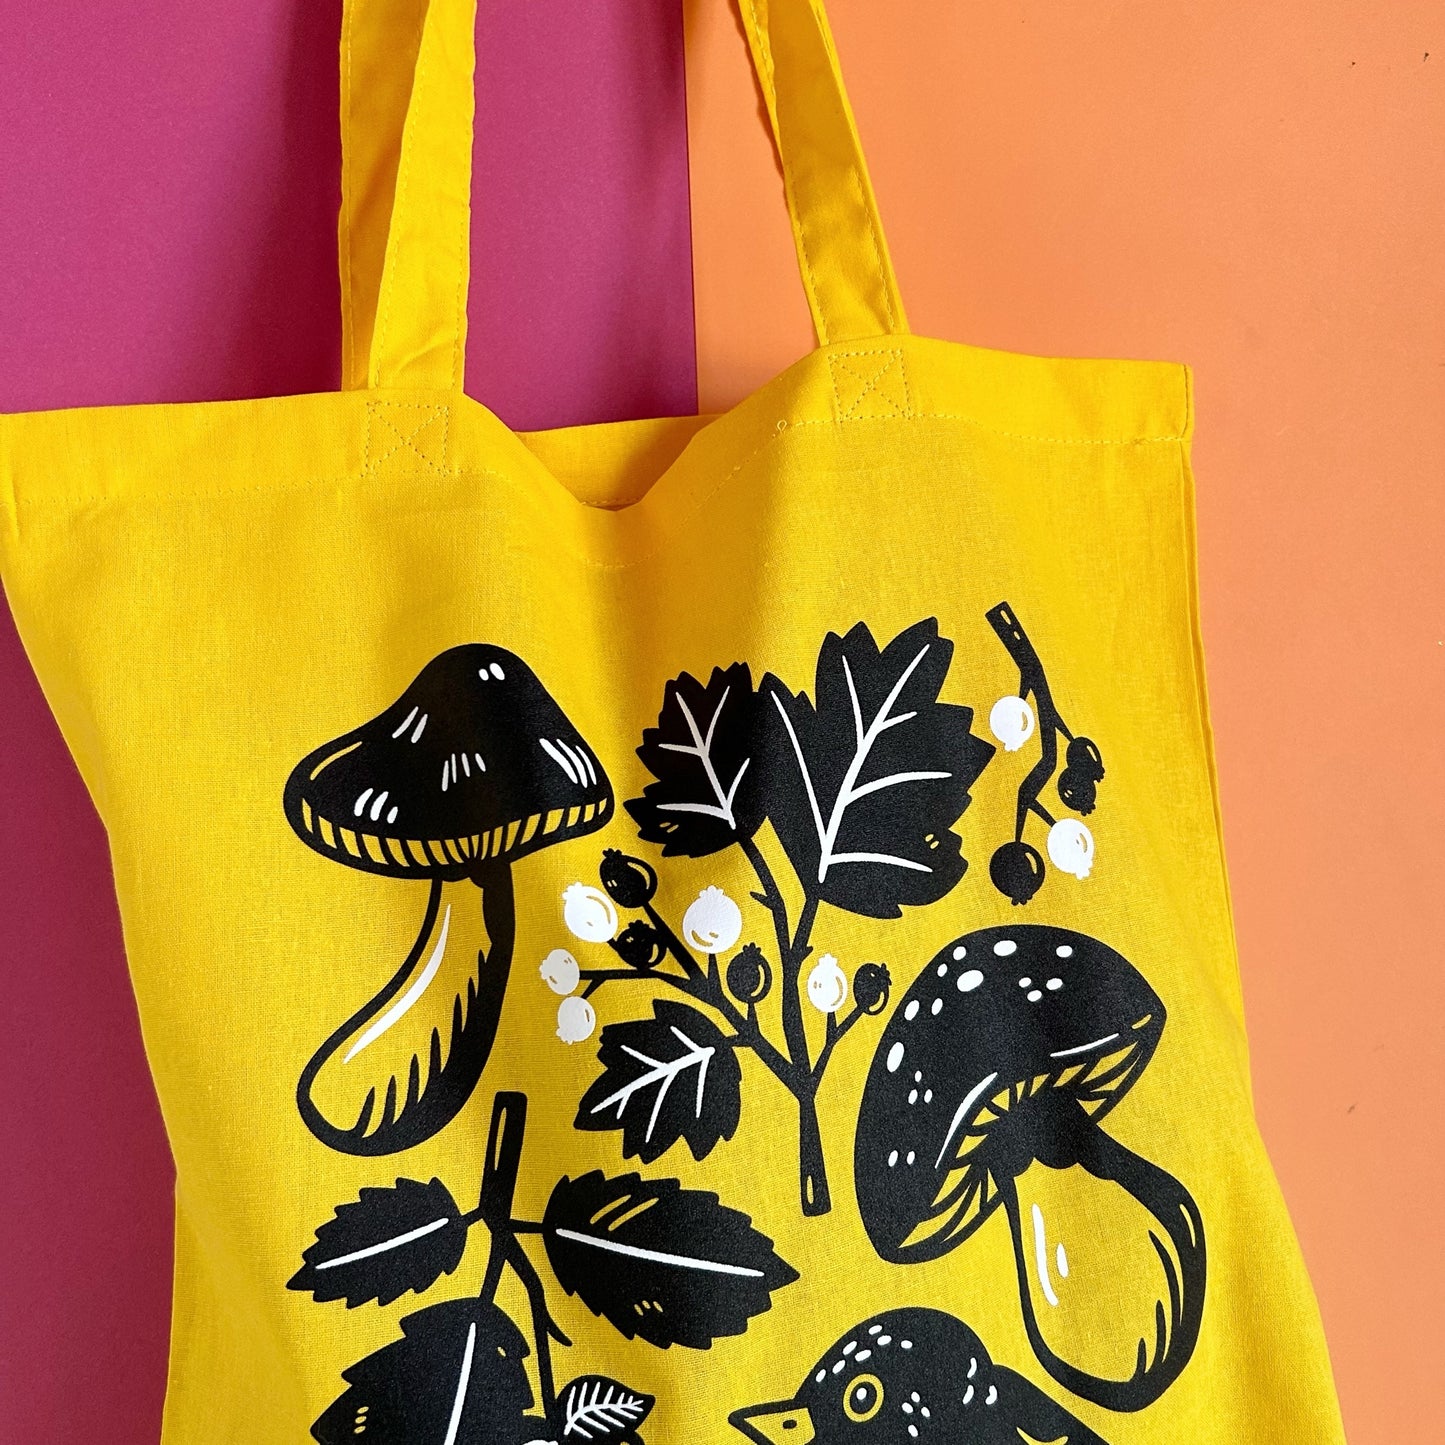 Blackbird Tote Bag in Sunflower Yellow